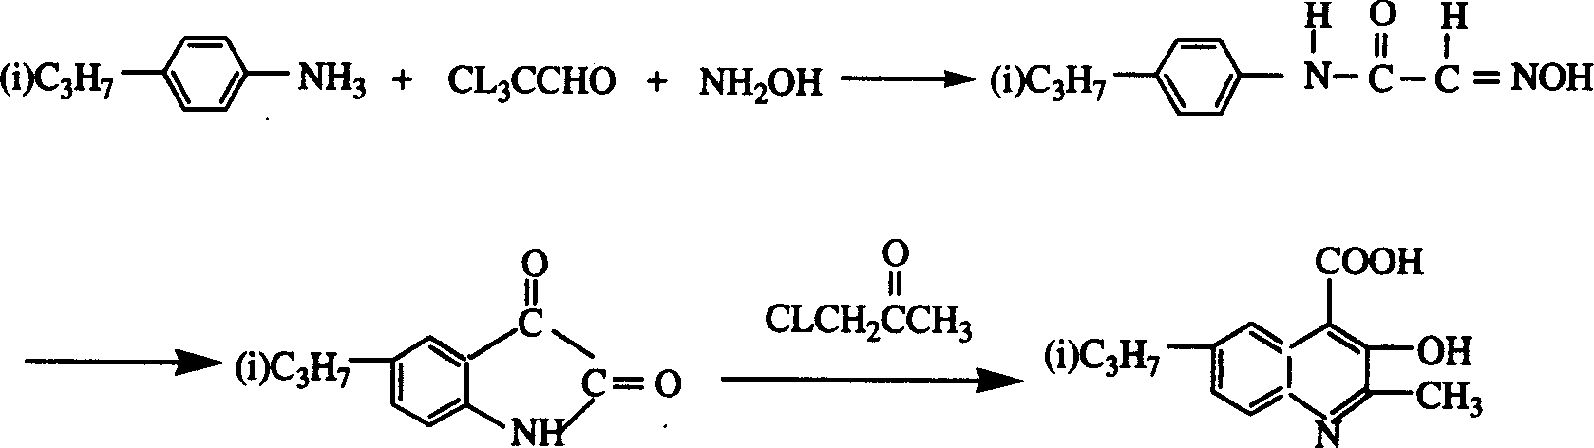 2-methyl-3-hydroxy-6-isopropylquinoline-4-carboxyl acid preparation method